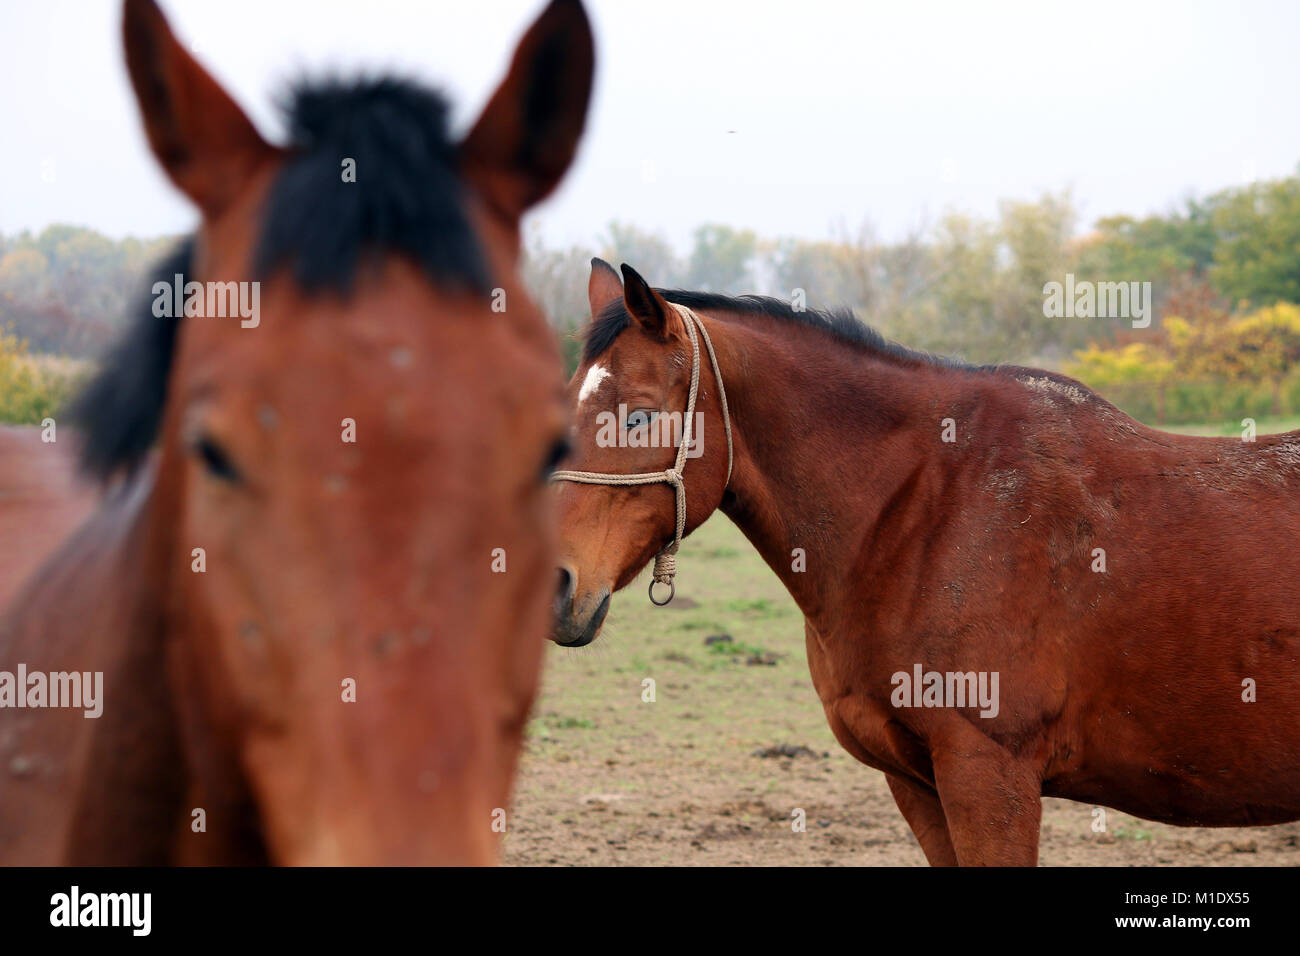 two horses portrait close up Stock Photo